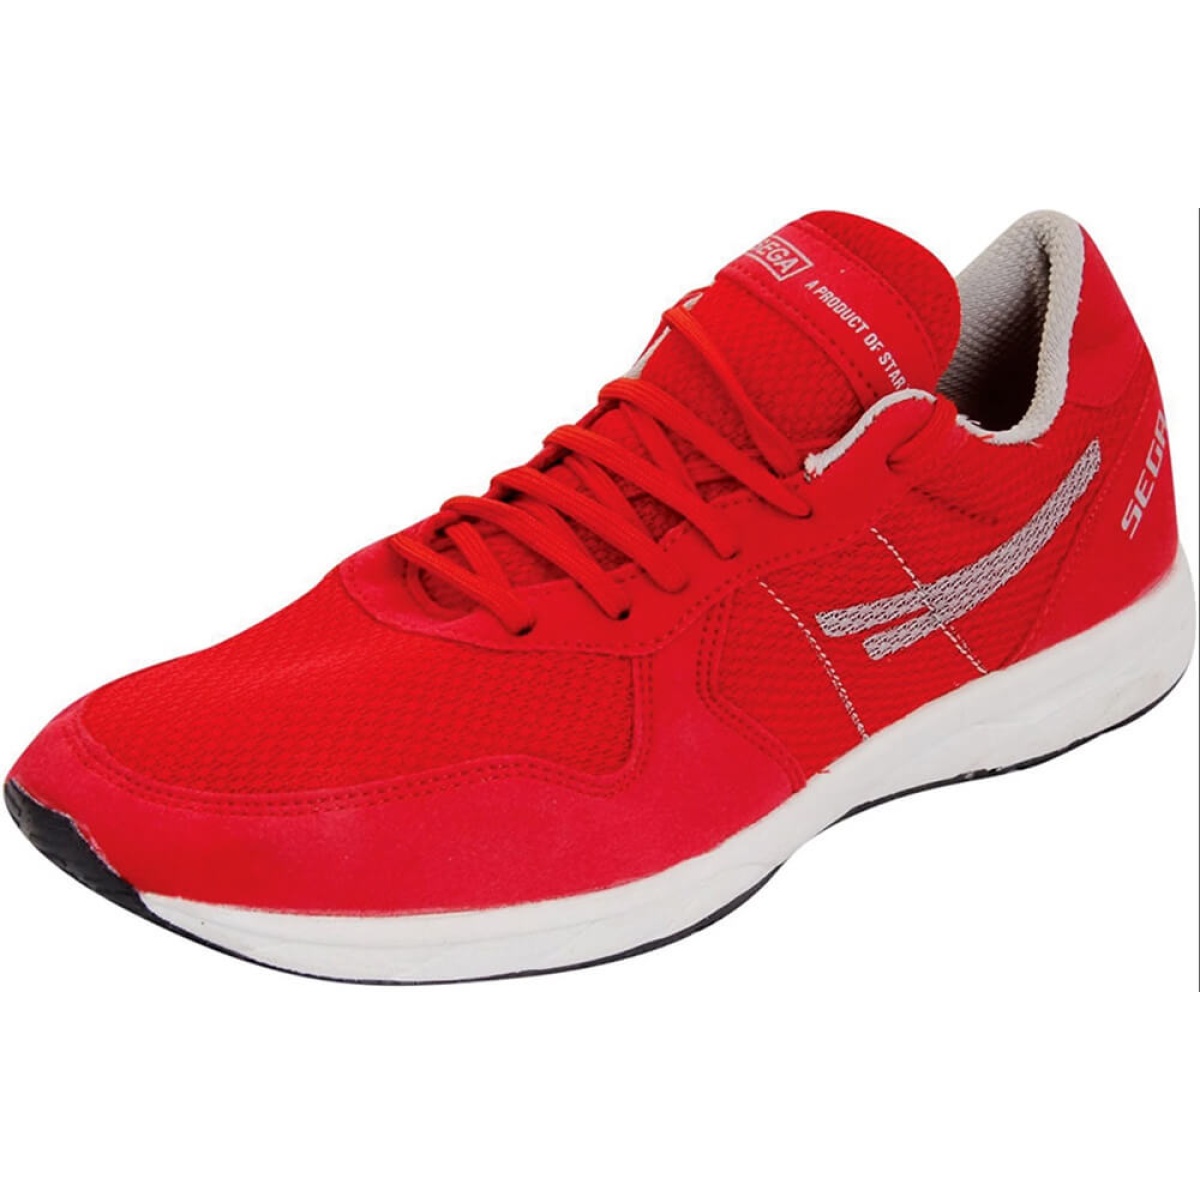 SEGA S10 Running Shoes For Men  Buy SEGA S10 Running Shoes For Men  Online at Best Price  Shop Online for Footwears in India  Flipkartcom